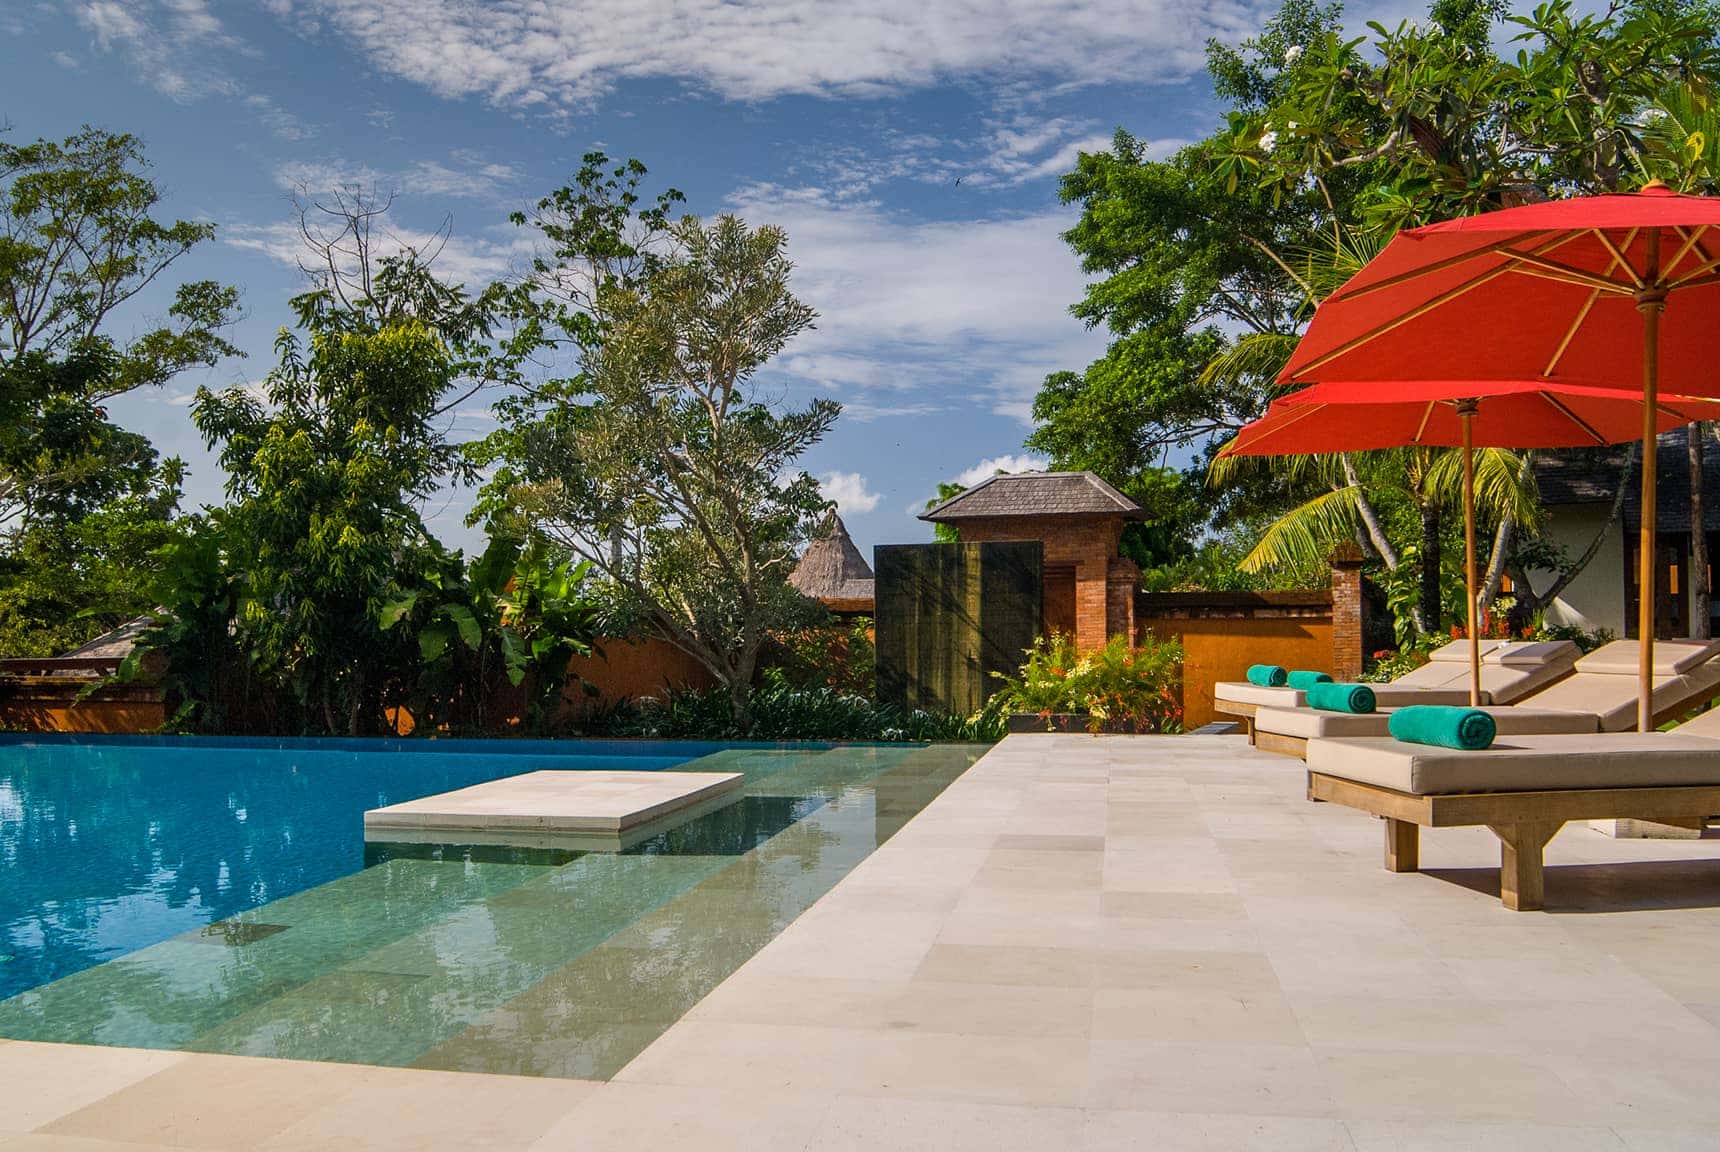 Villa Astika Toyaning - Echo Beach, Bali Indonesia (Bali villa photography by master photographer Rick Carmichael of LuxViz)